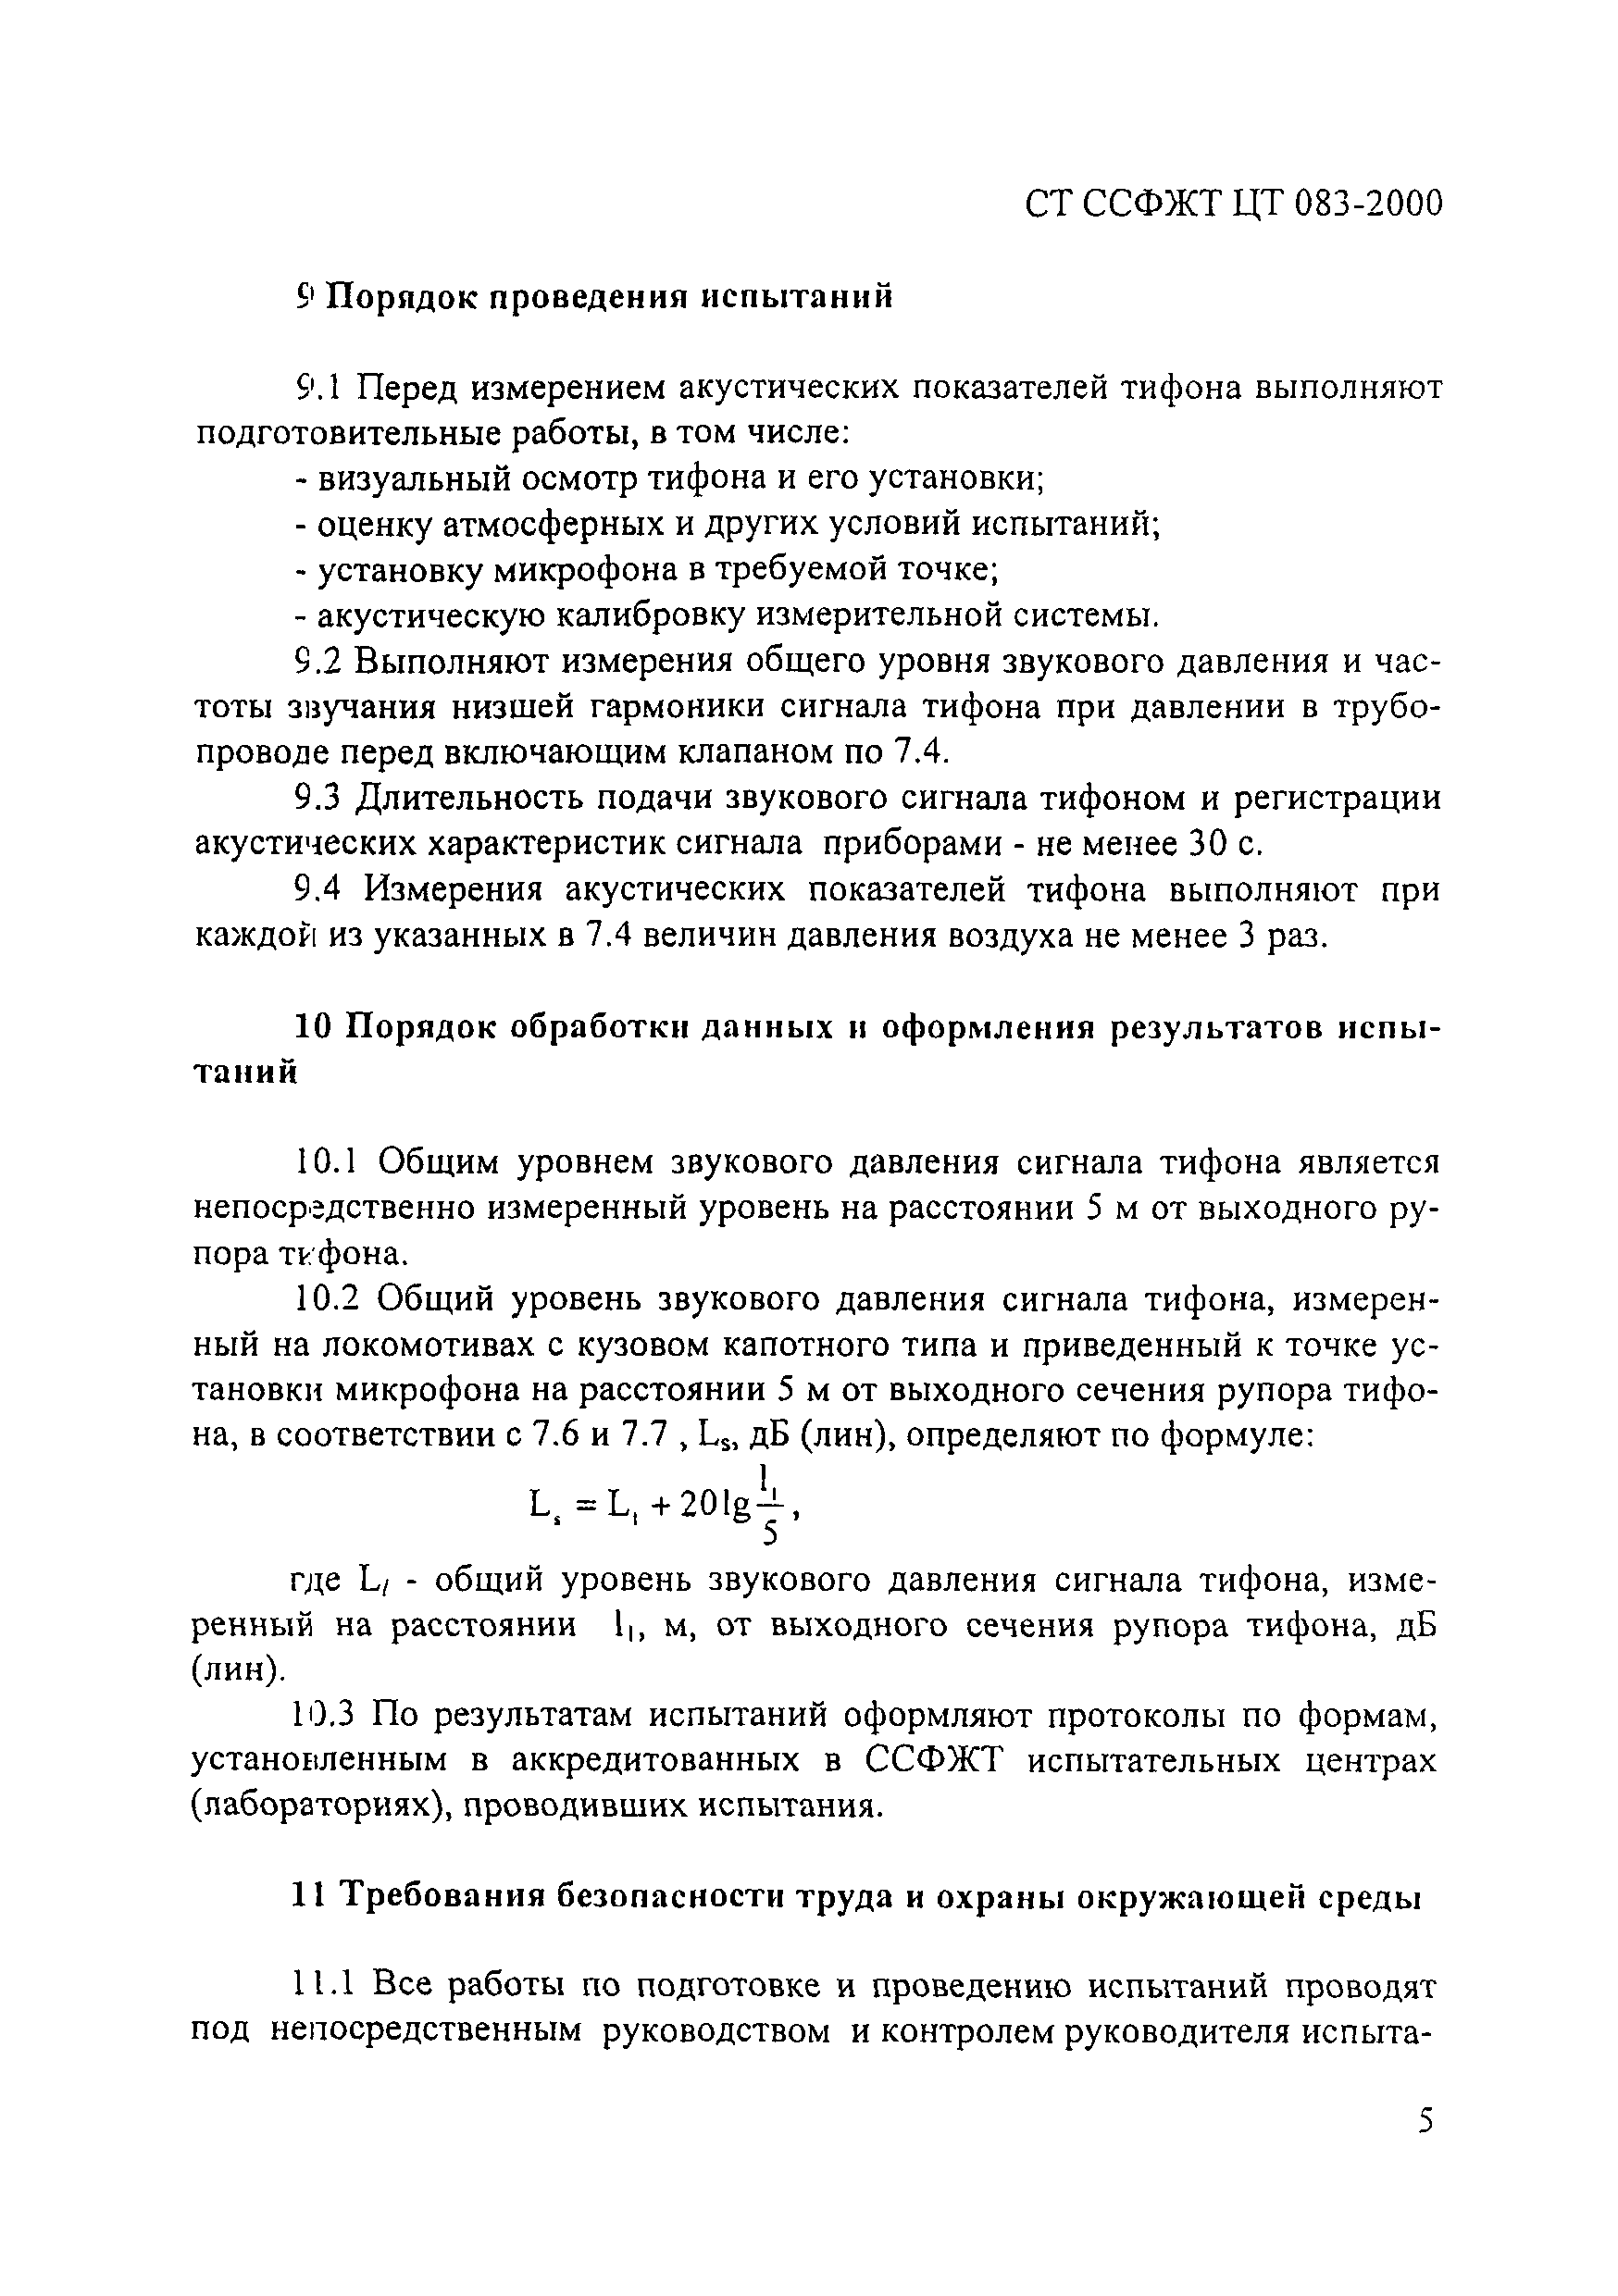 СТ ССФЖТ ЦТ 083-2000